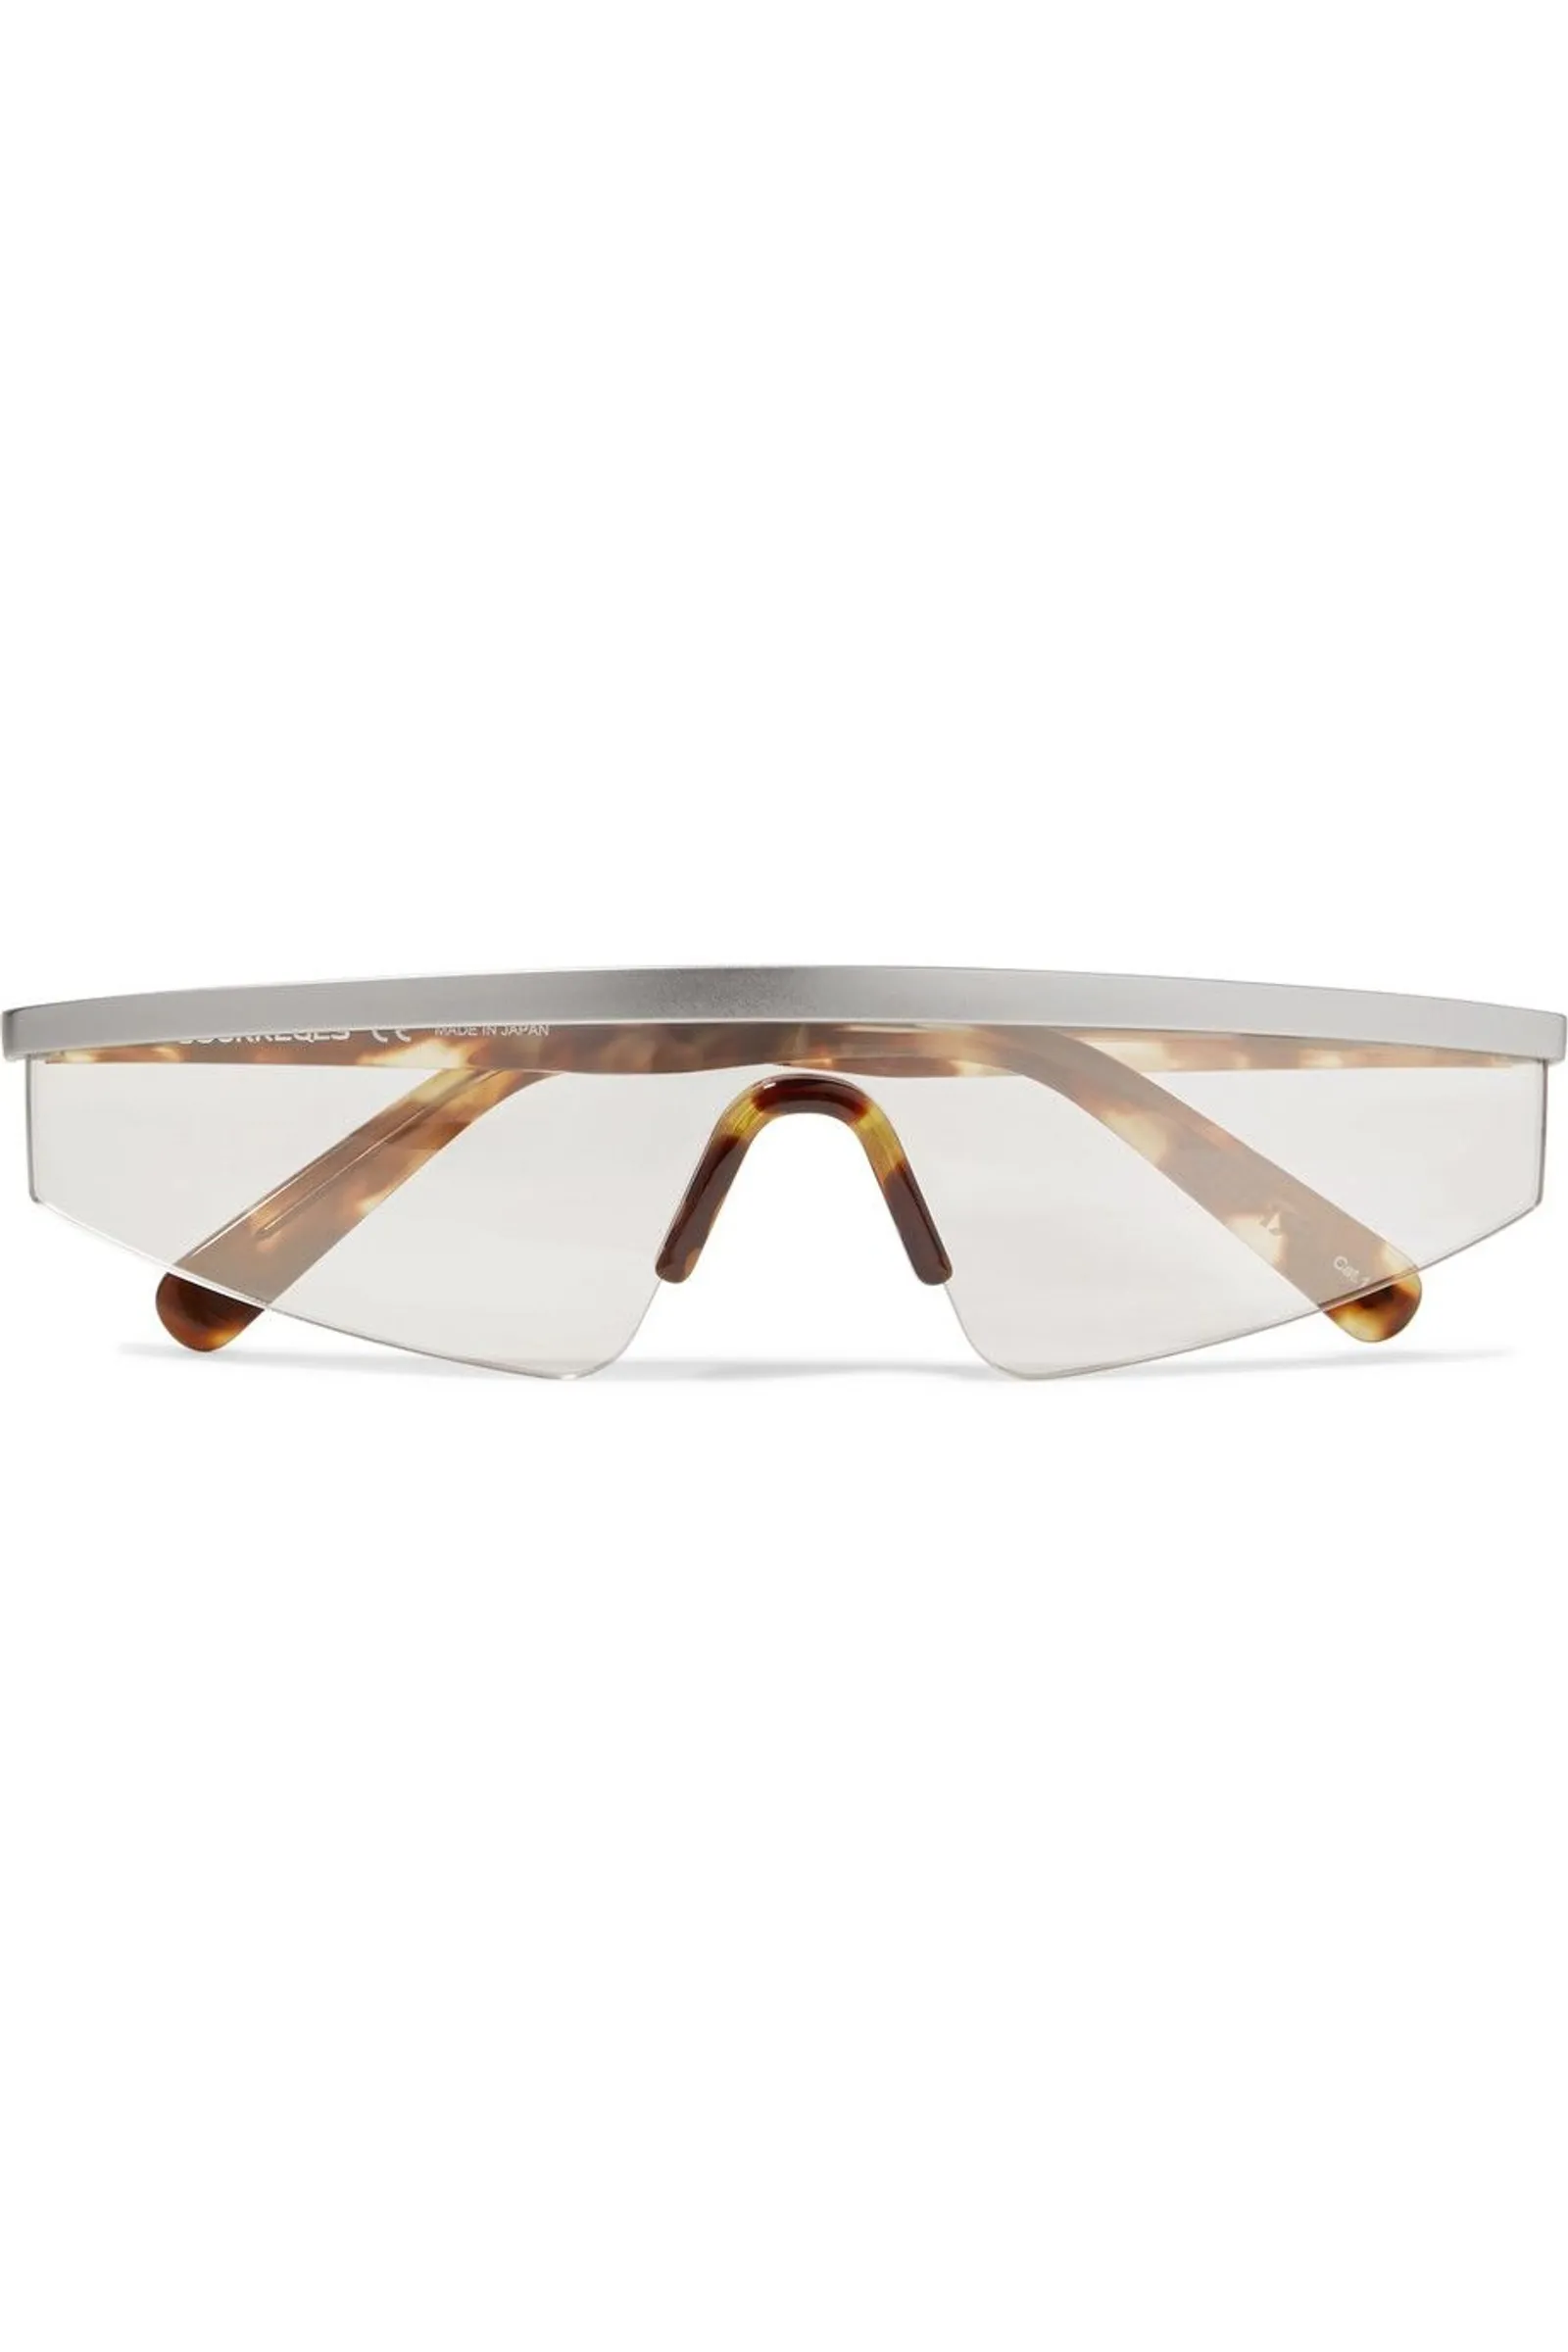 #PopbelaOOTD: Kacamata Futuristik!